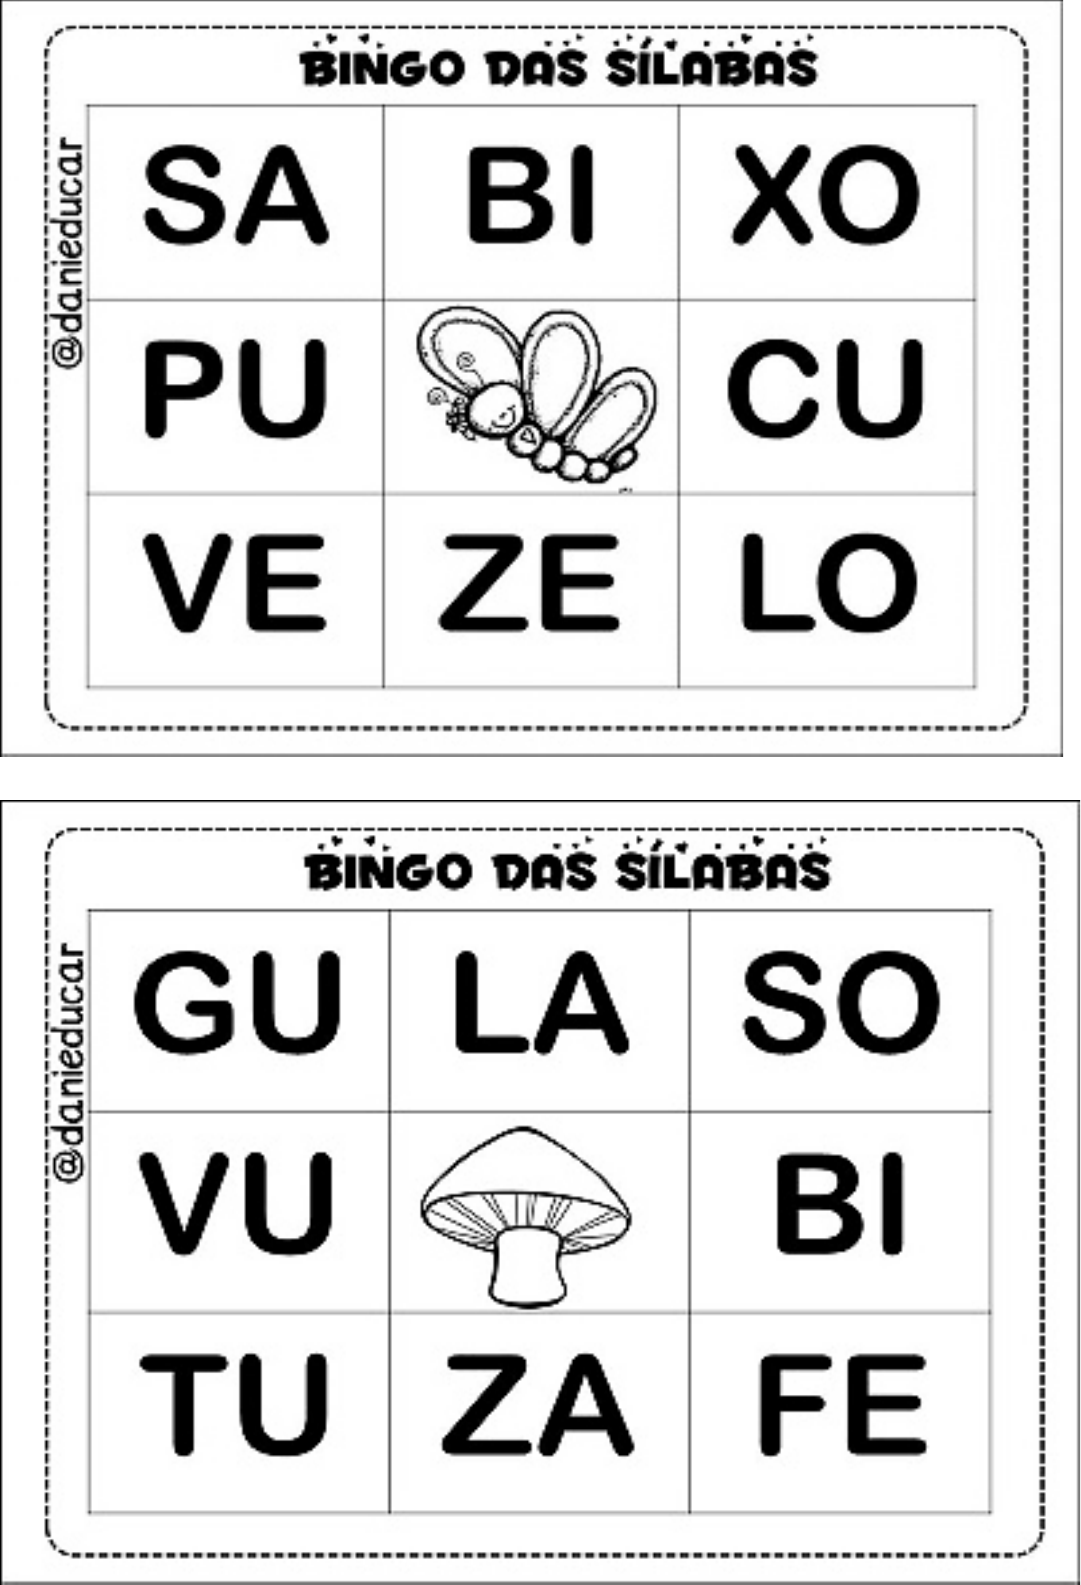 Bingo de palavras simples - Dani Educar  Palavras com 2 silabas, Palavras  simples, Bingo de palavras